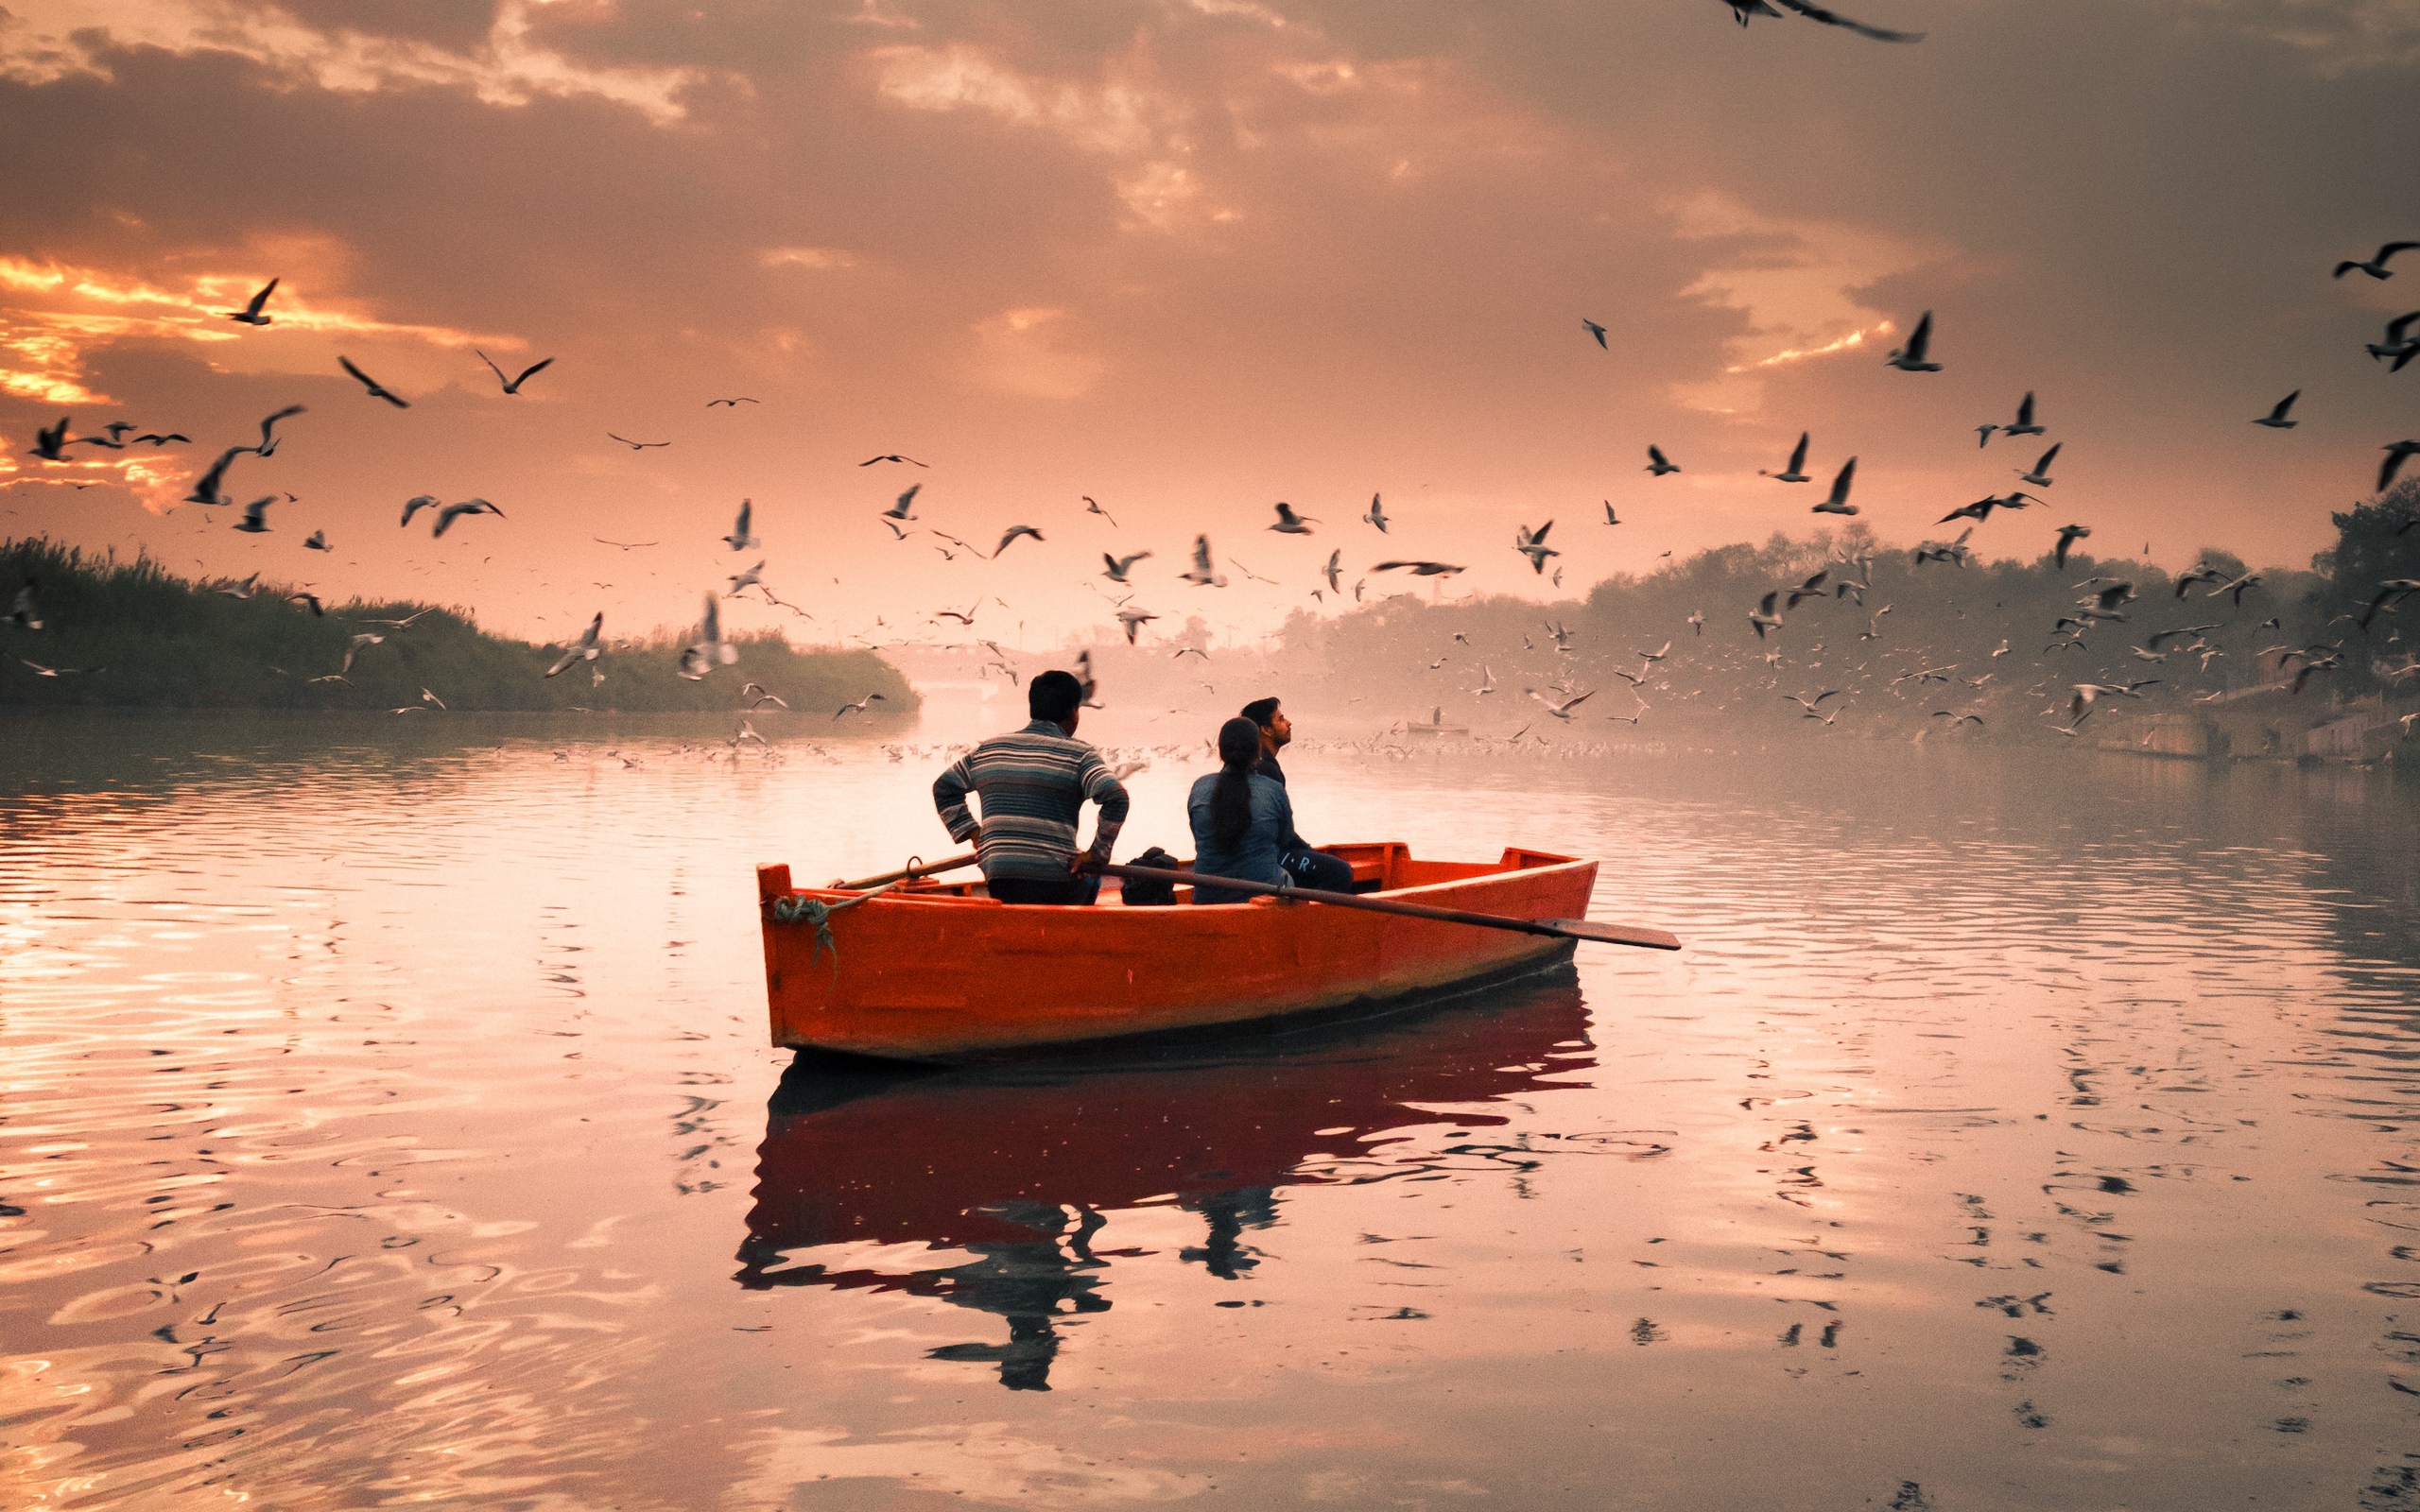 Туристы плыли по озеру. Лодка на реке. Человек в лодке. Фотосессия в лодке. Человек в лодке на озере.